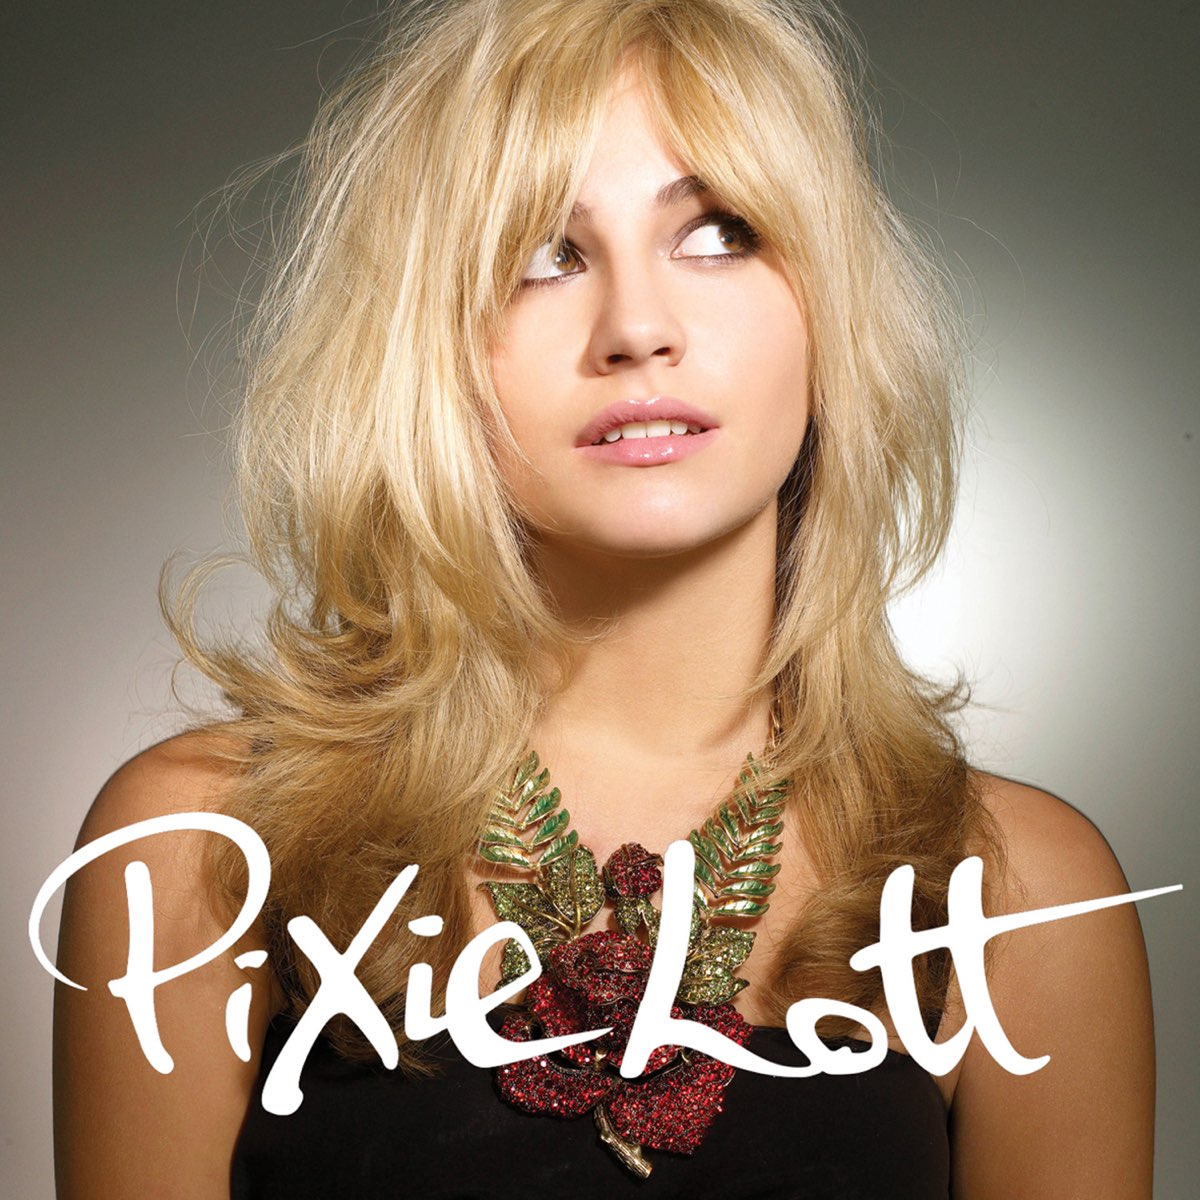 Pixie Lott Turn It Up cover artwork